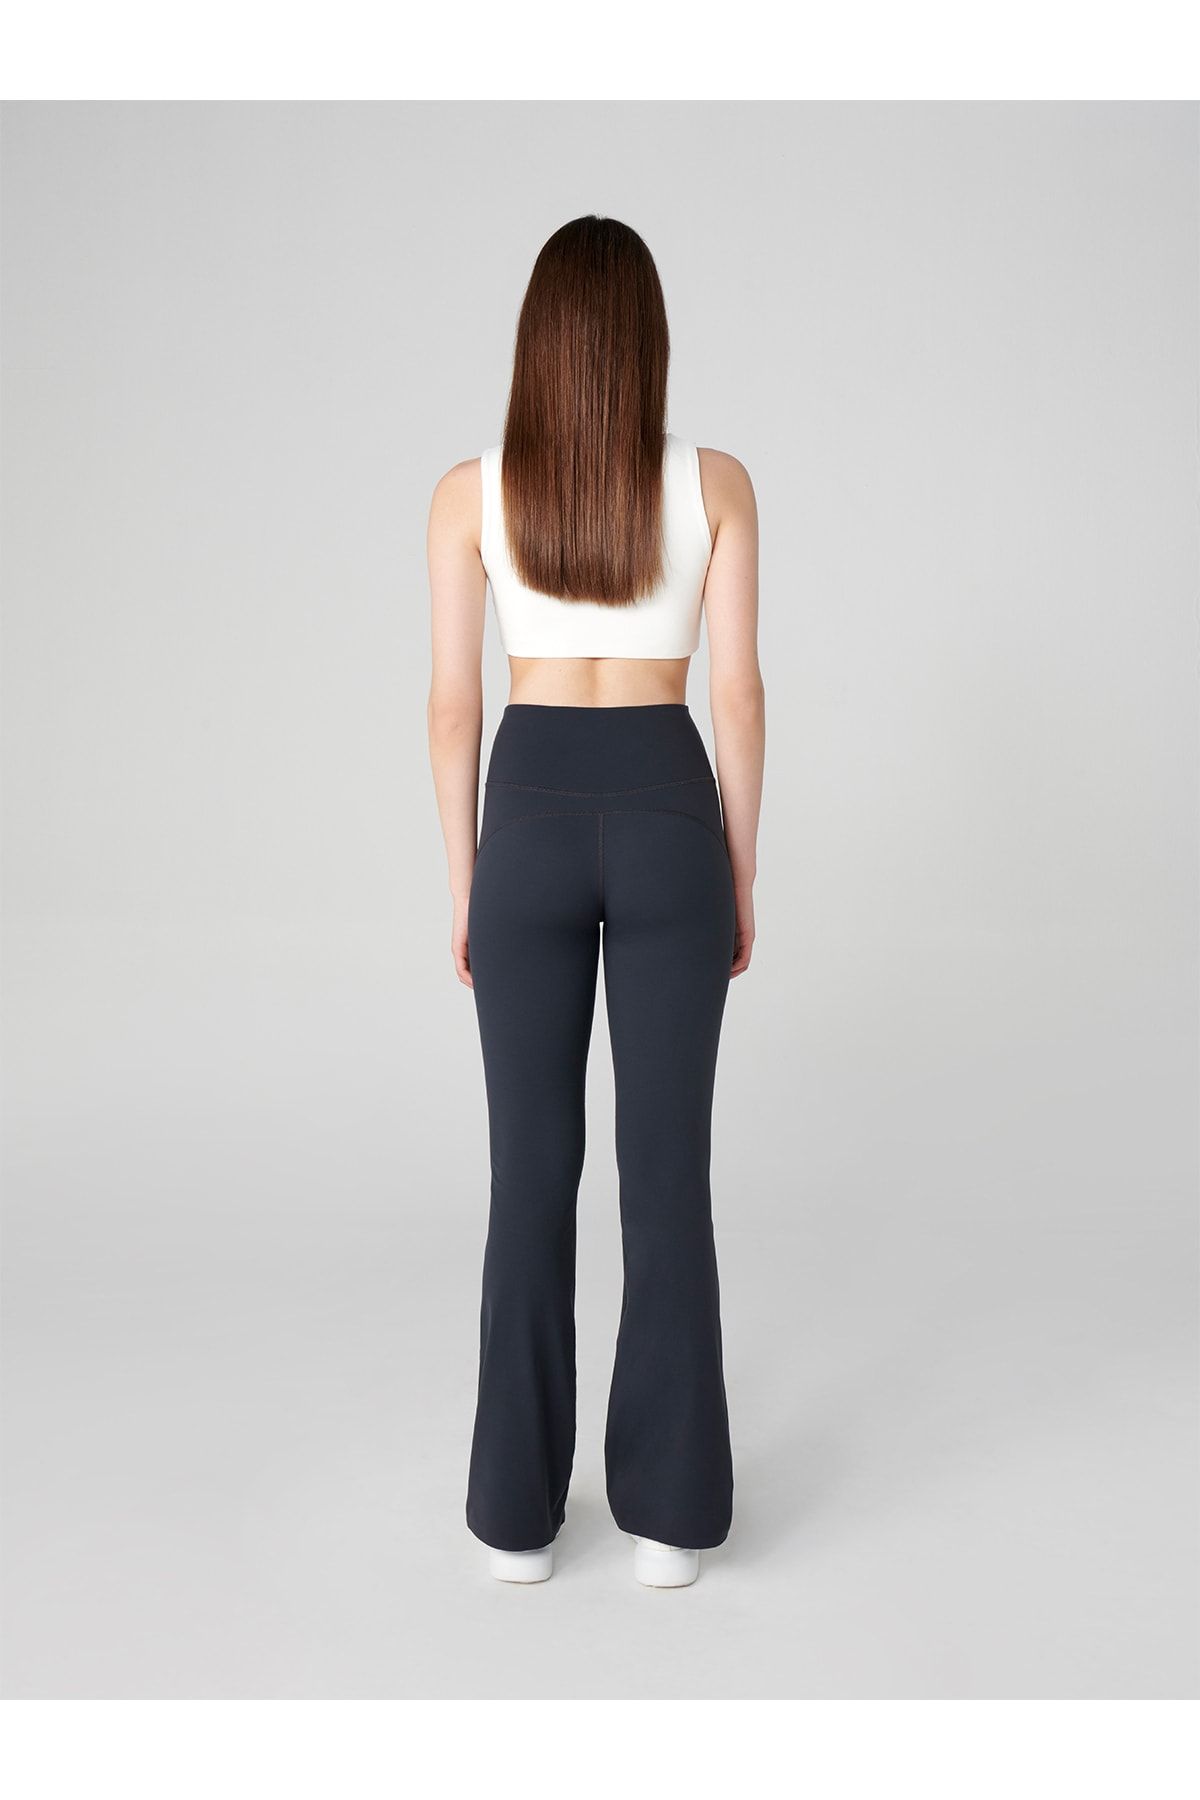 LULULEMON - Capri cropped yoga pants / Size 2 / - Depop